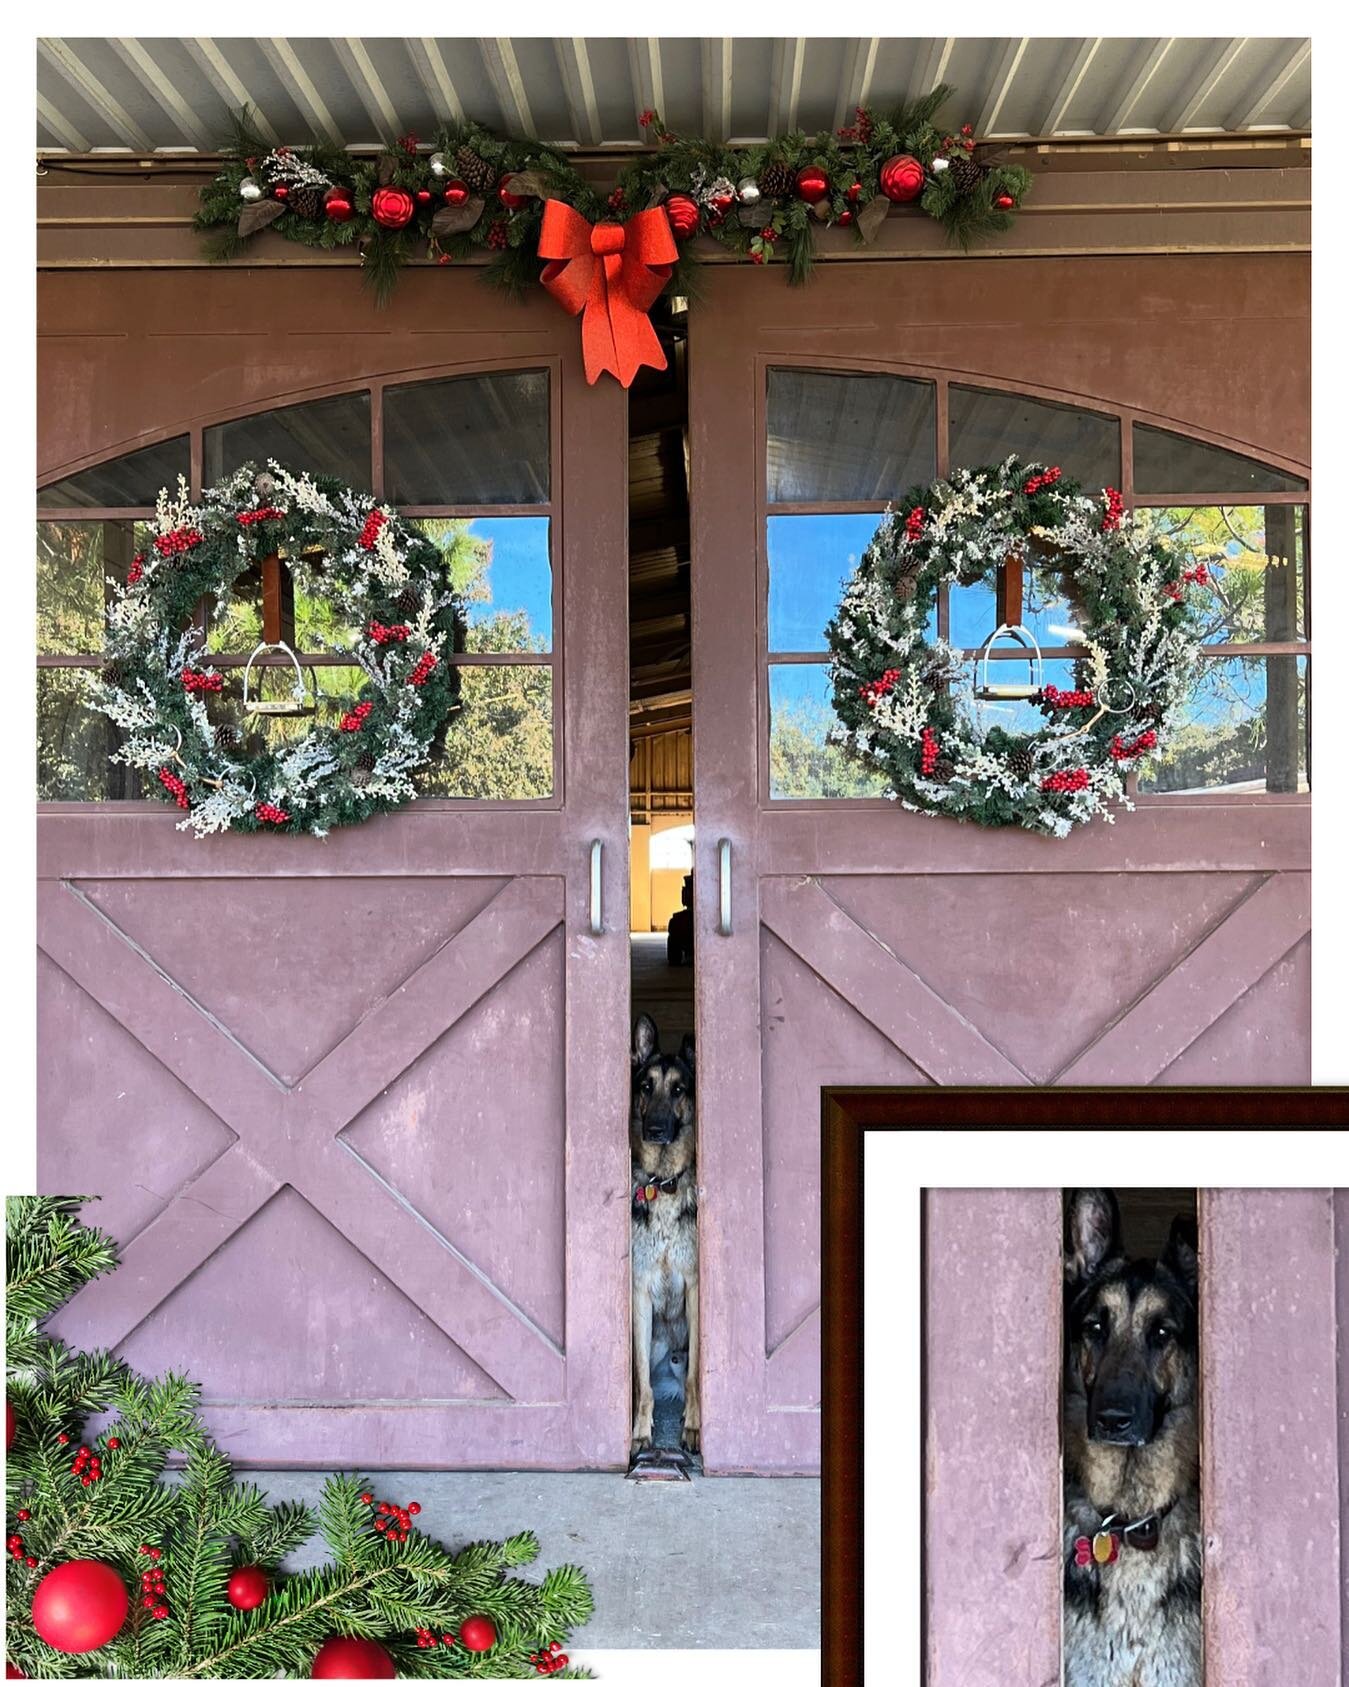 Only 28 more days until Christmas! Dante is already waiting for Santa. 

#santa #barndog #frisco #horse #barn #christmas